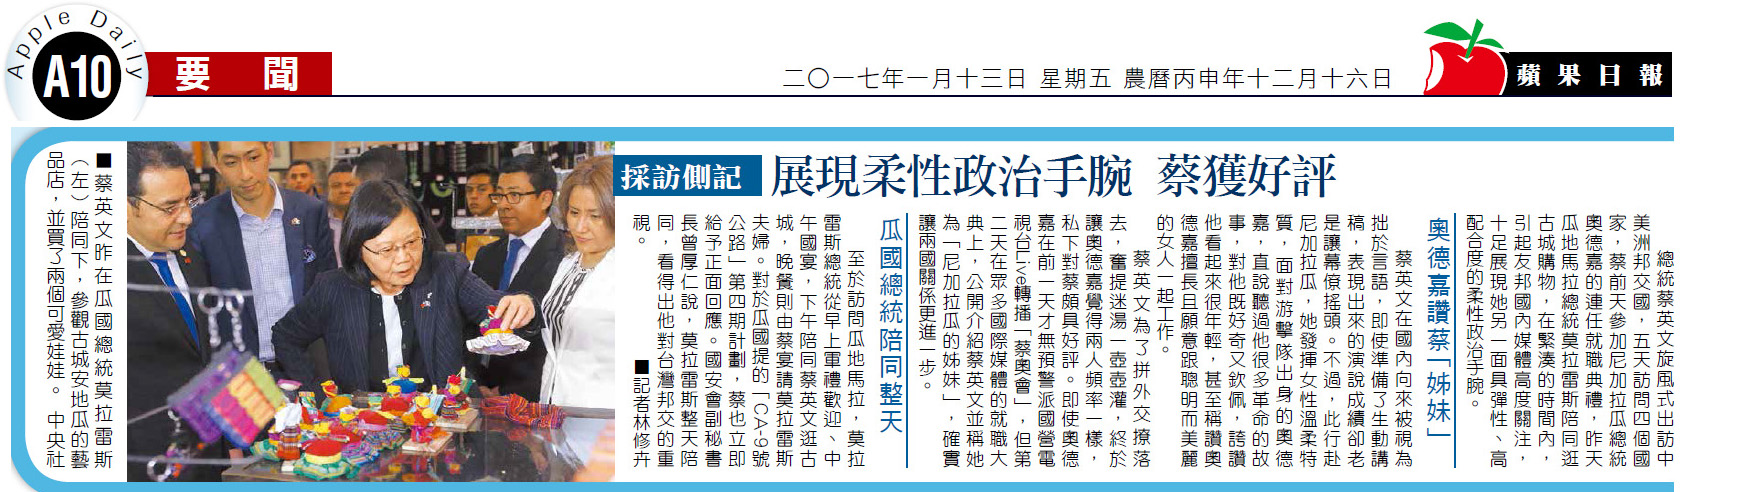 La Presidenta Tsai elogiada por su sutil manejo político